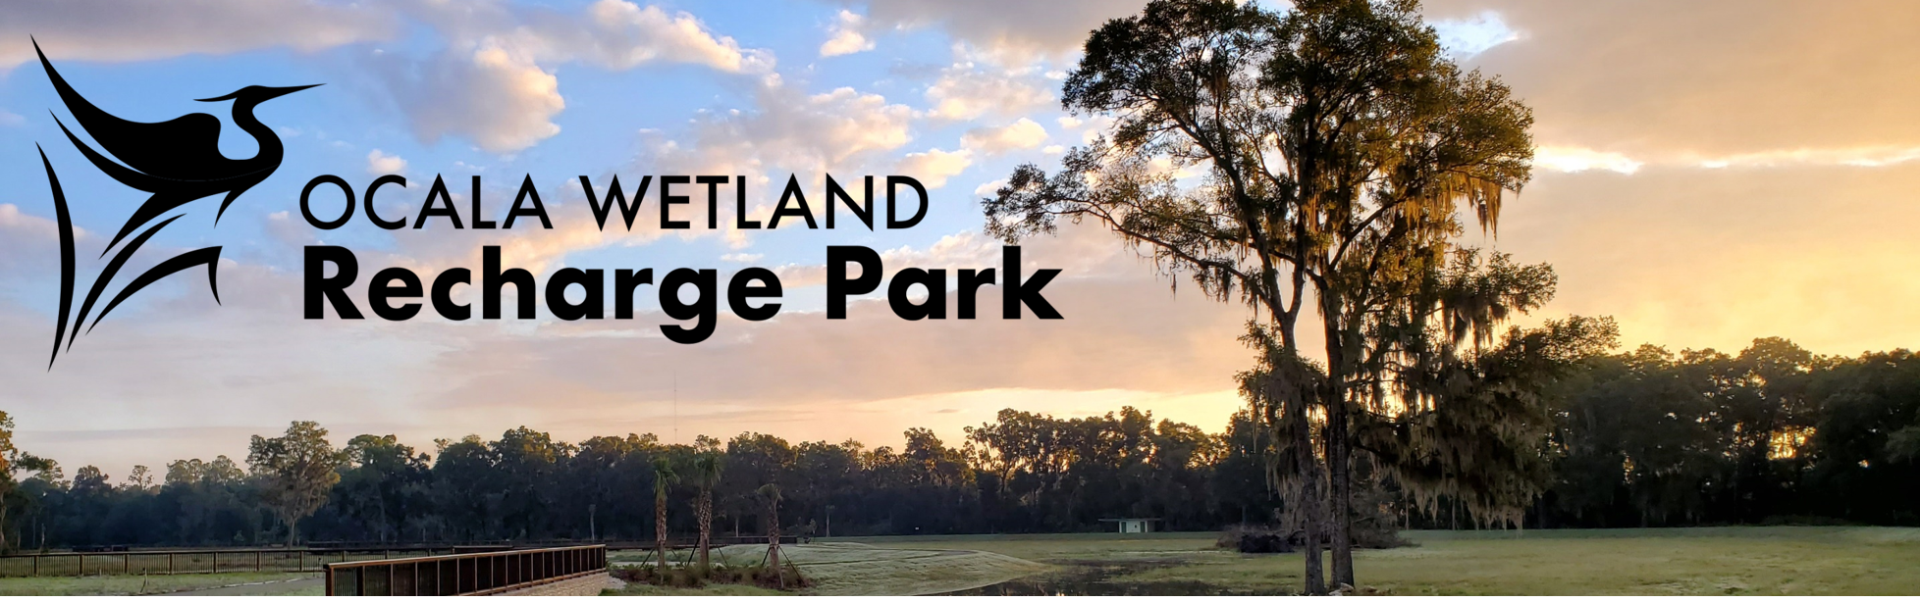 Wetland Recharge Park